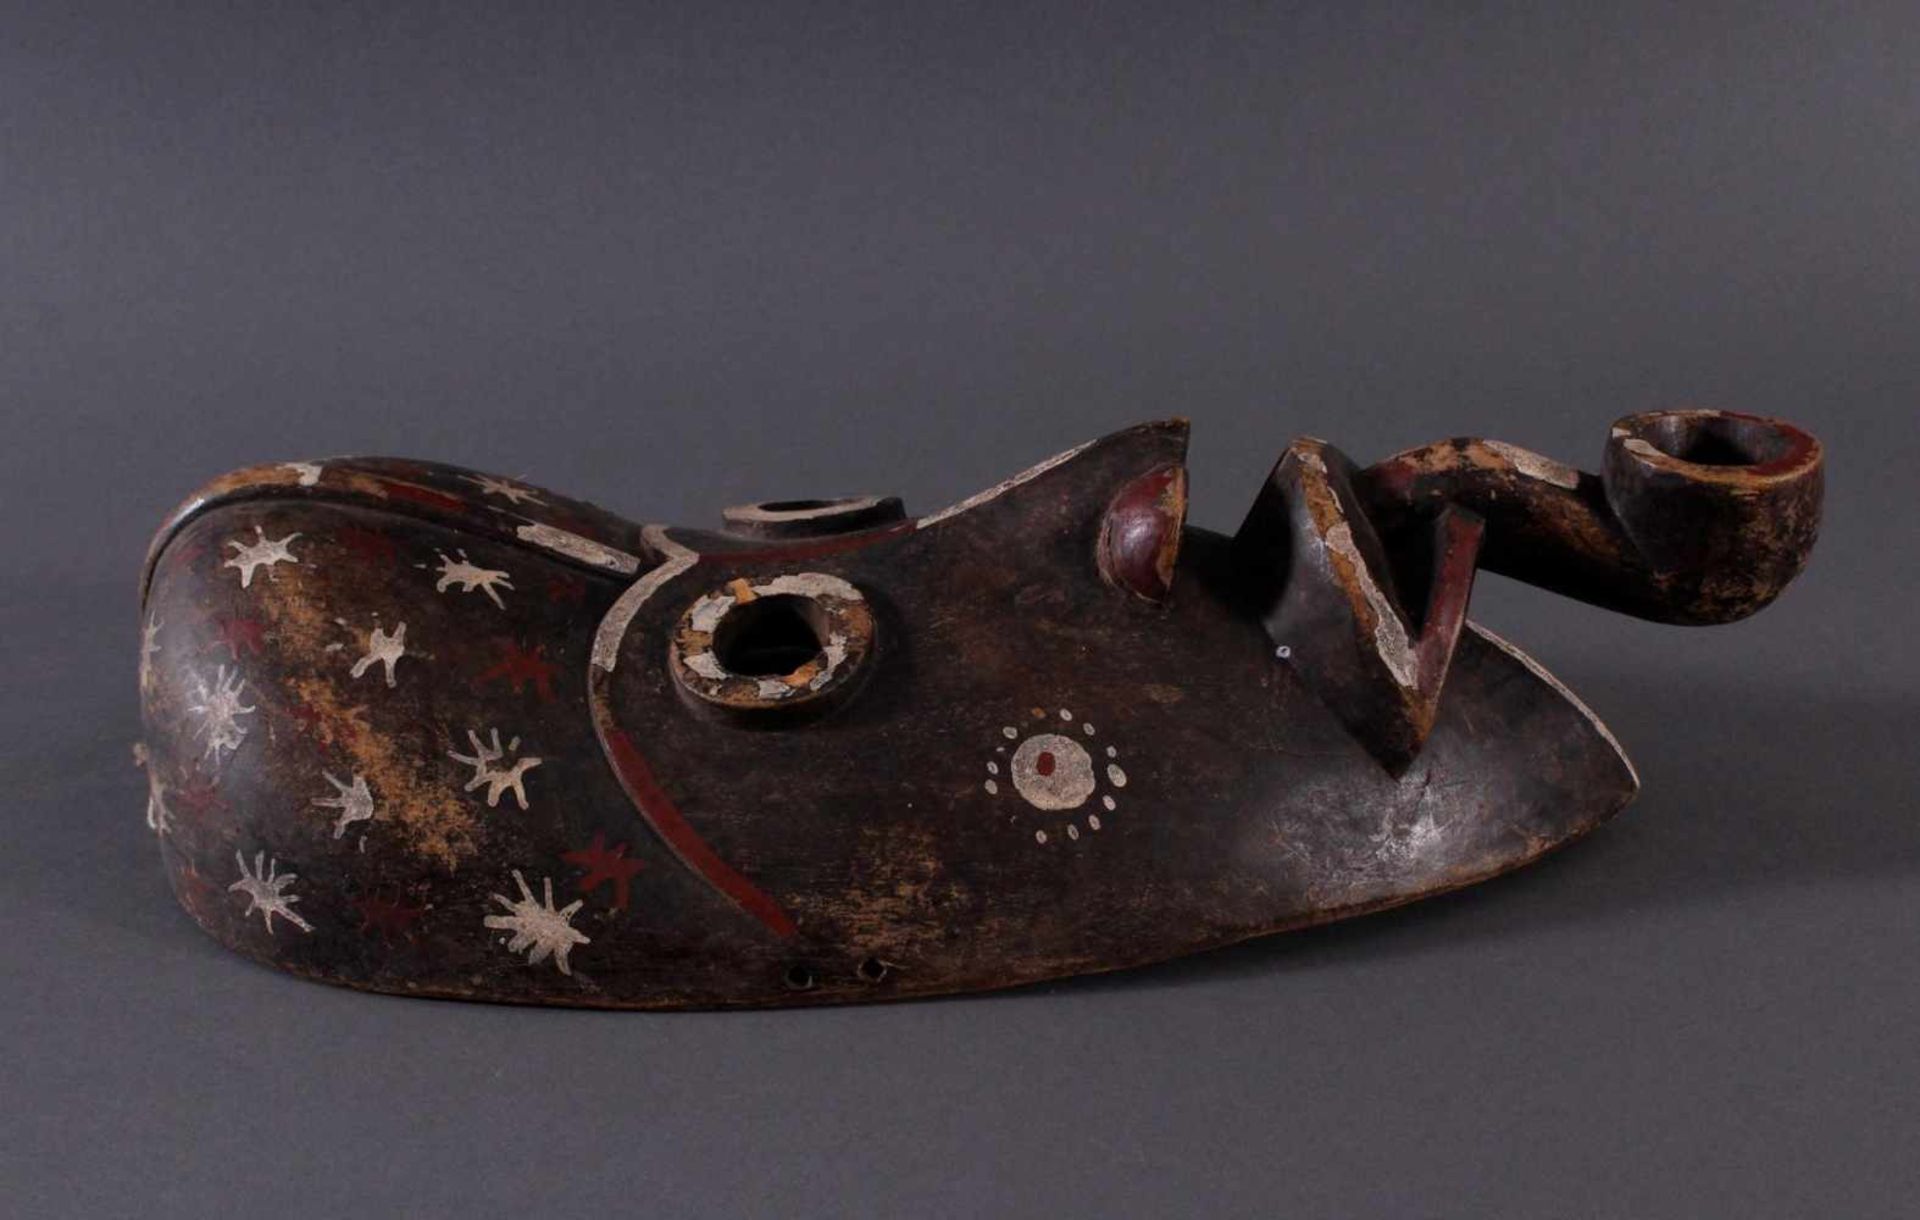 Antike Holzmaske der Dan, 1. Hälfte 20. Jh.Holz geschnitzt, "Pfeifenraucher", dunkle Patina, - Bild 2 aus 4